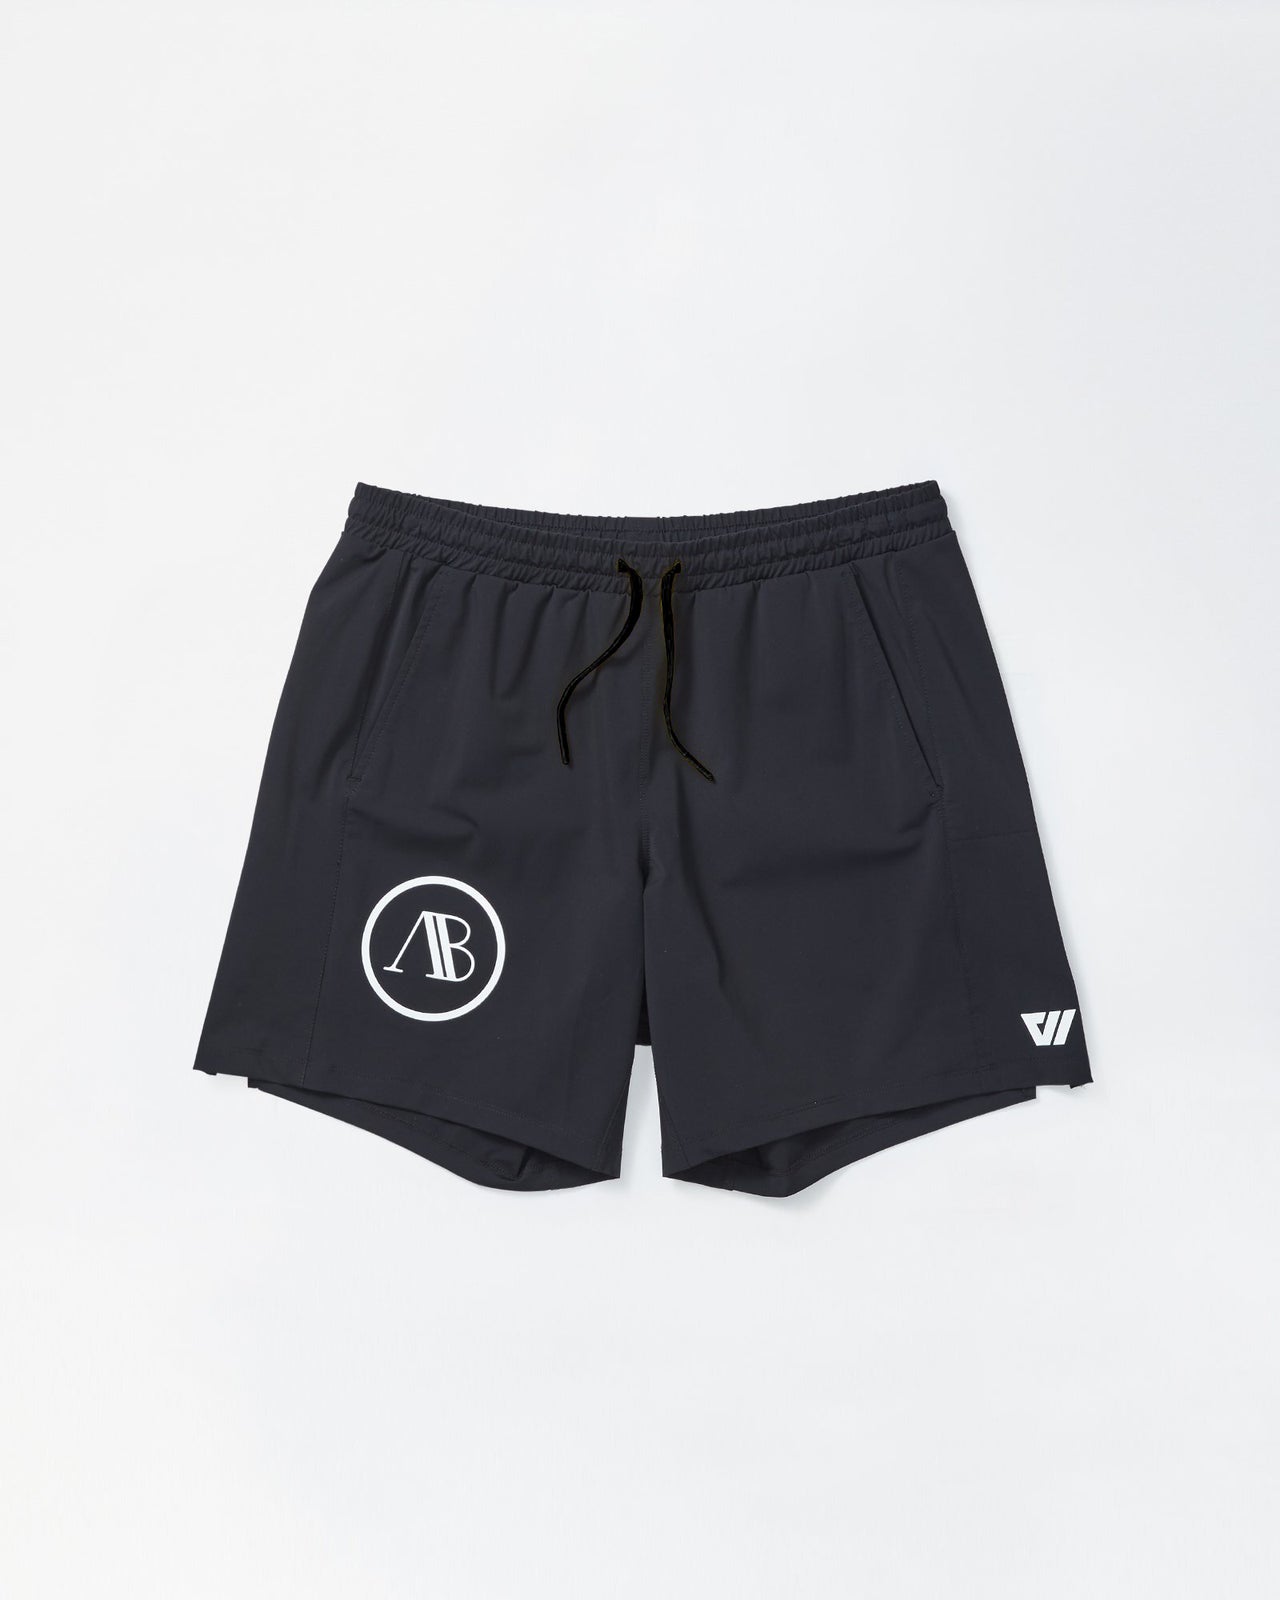 AB Men's Shorts